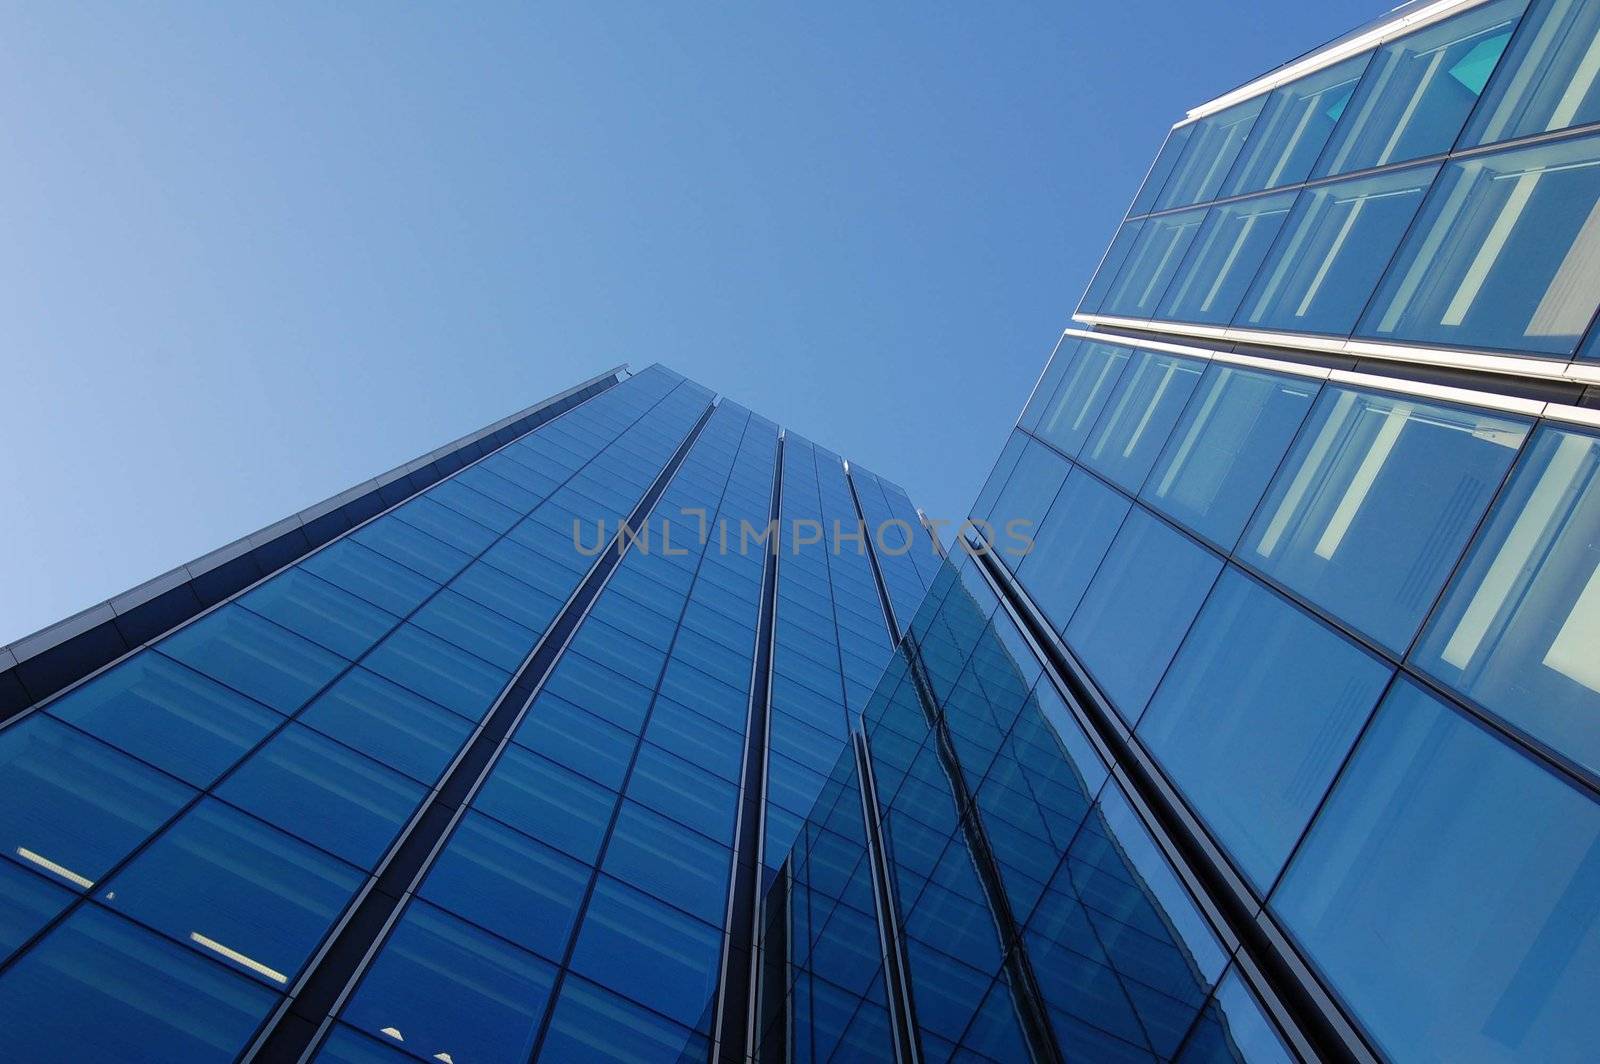 Large modern glass buildings against a blue sky